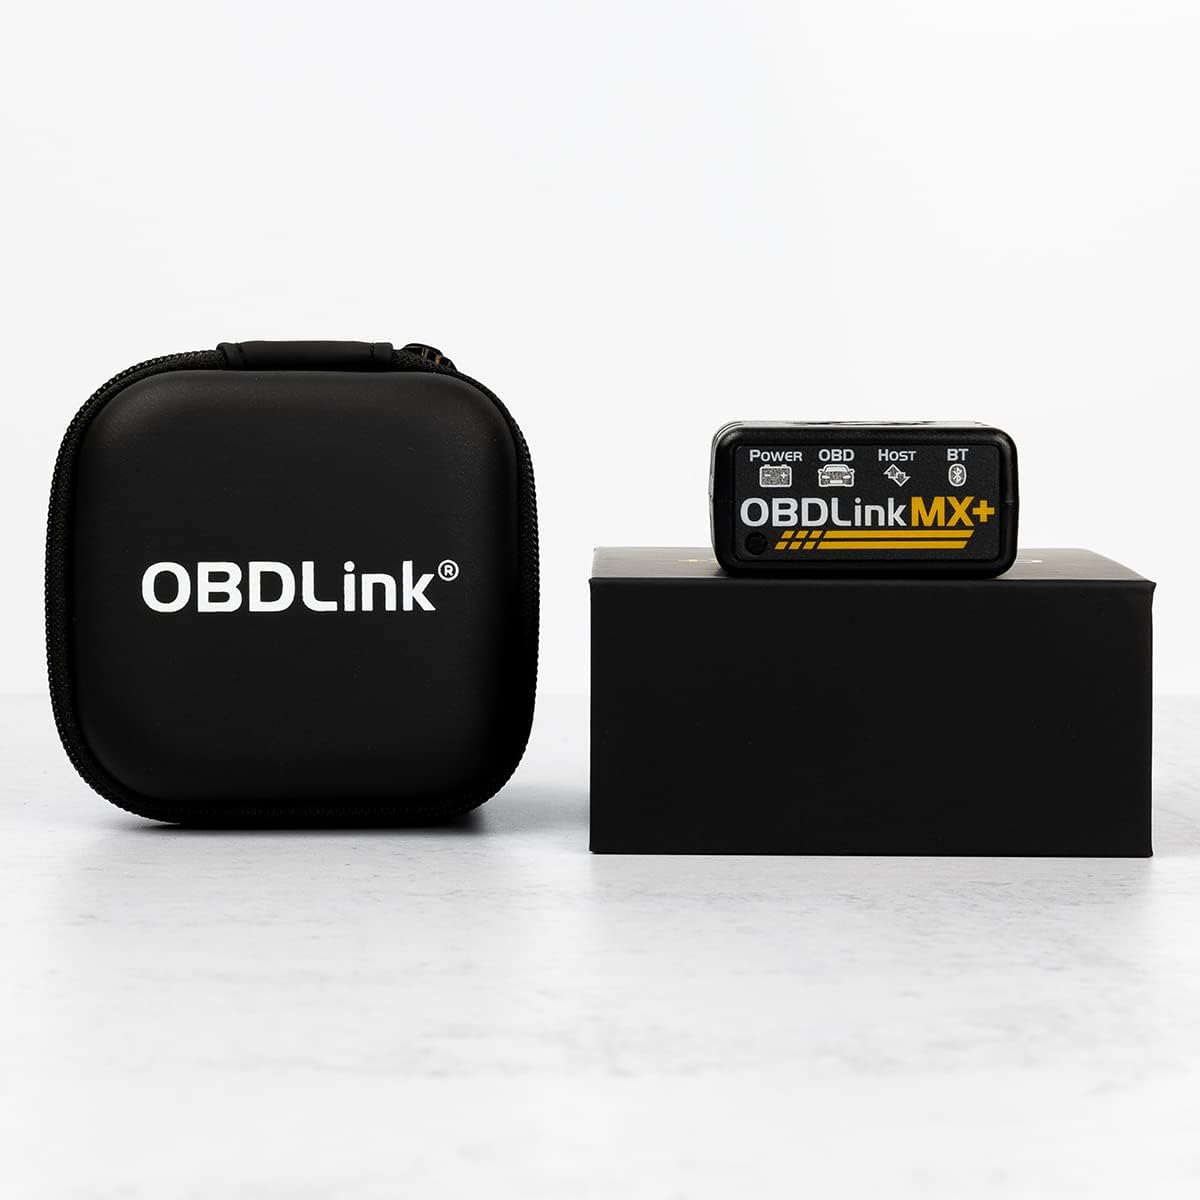 OBDLink MX